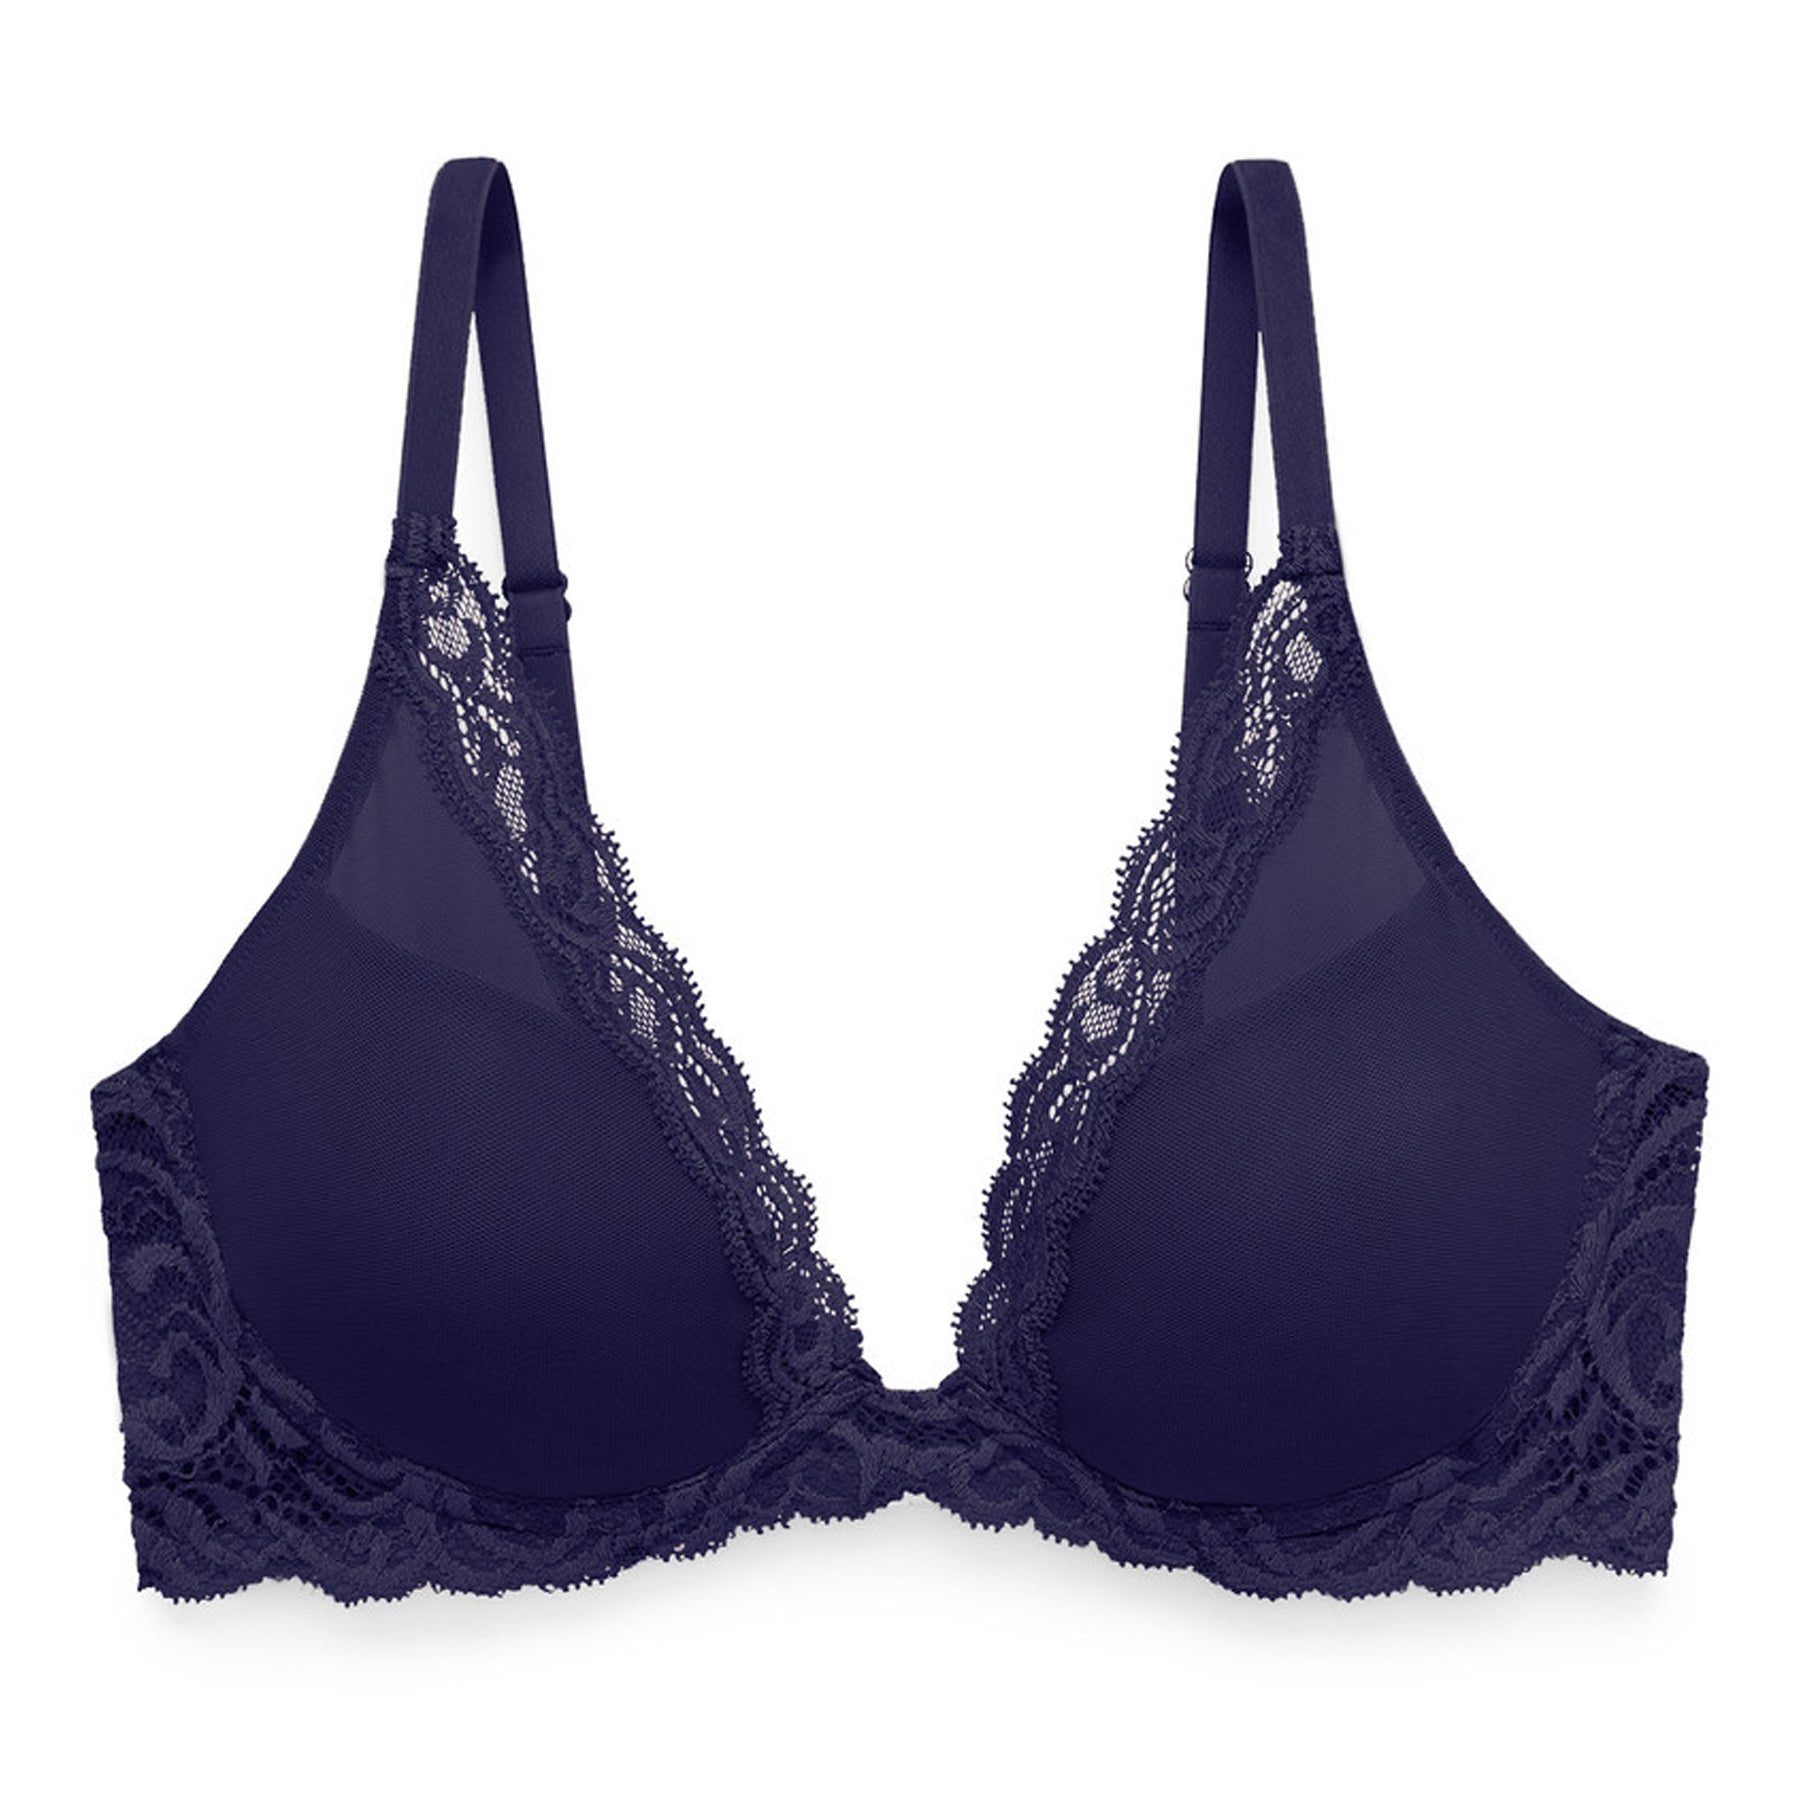 Cacique blue, black & white geometric bra 44D Size undefined - $20 - From  Lori